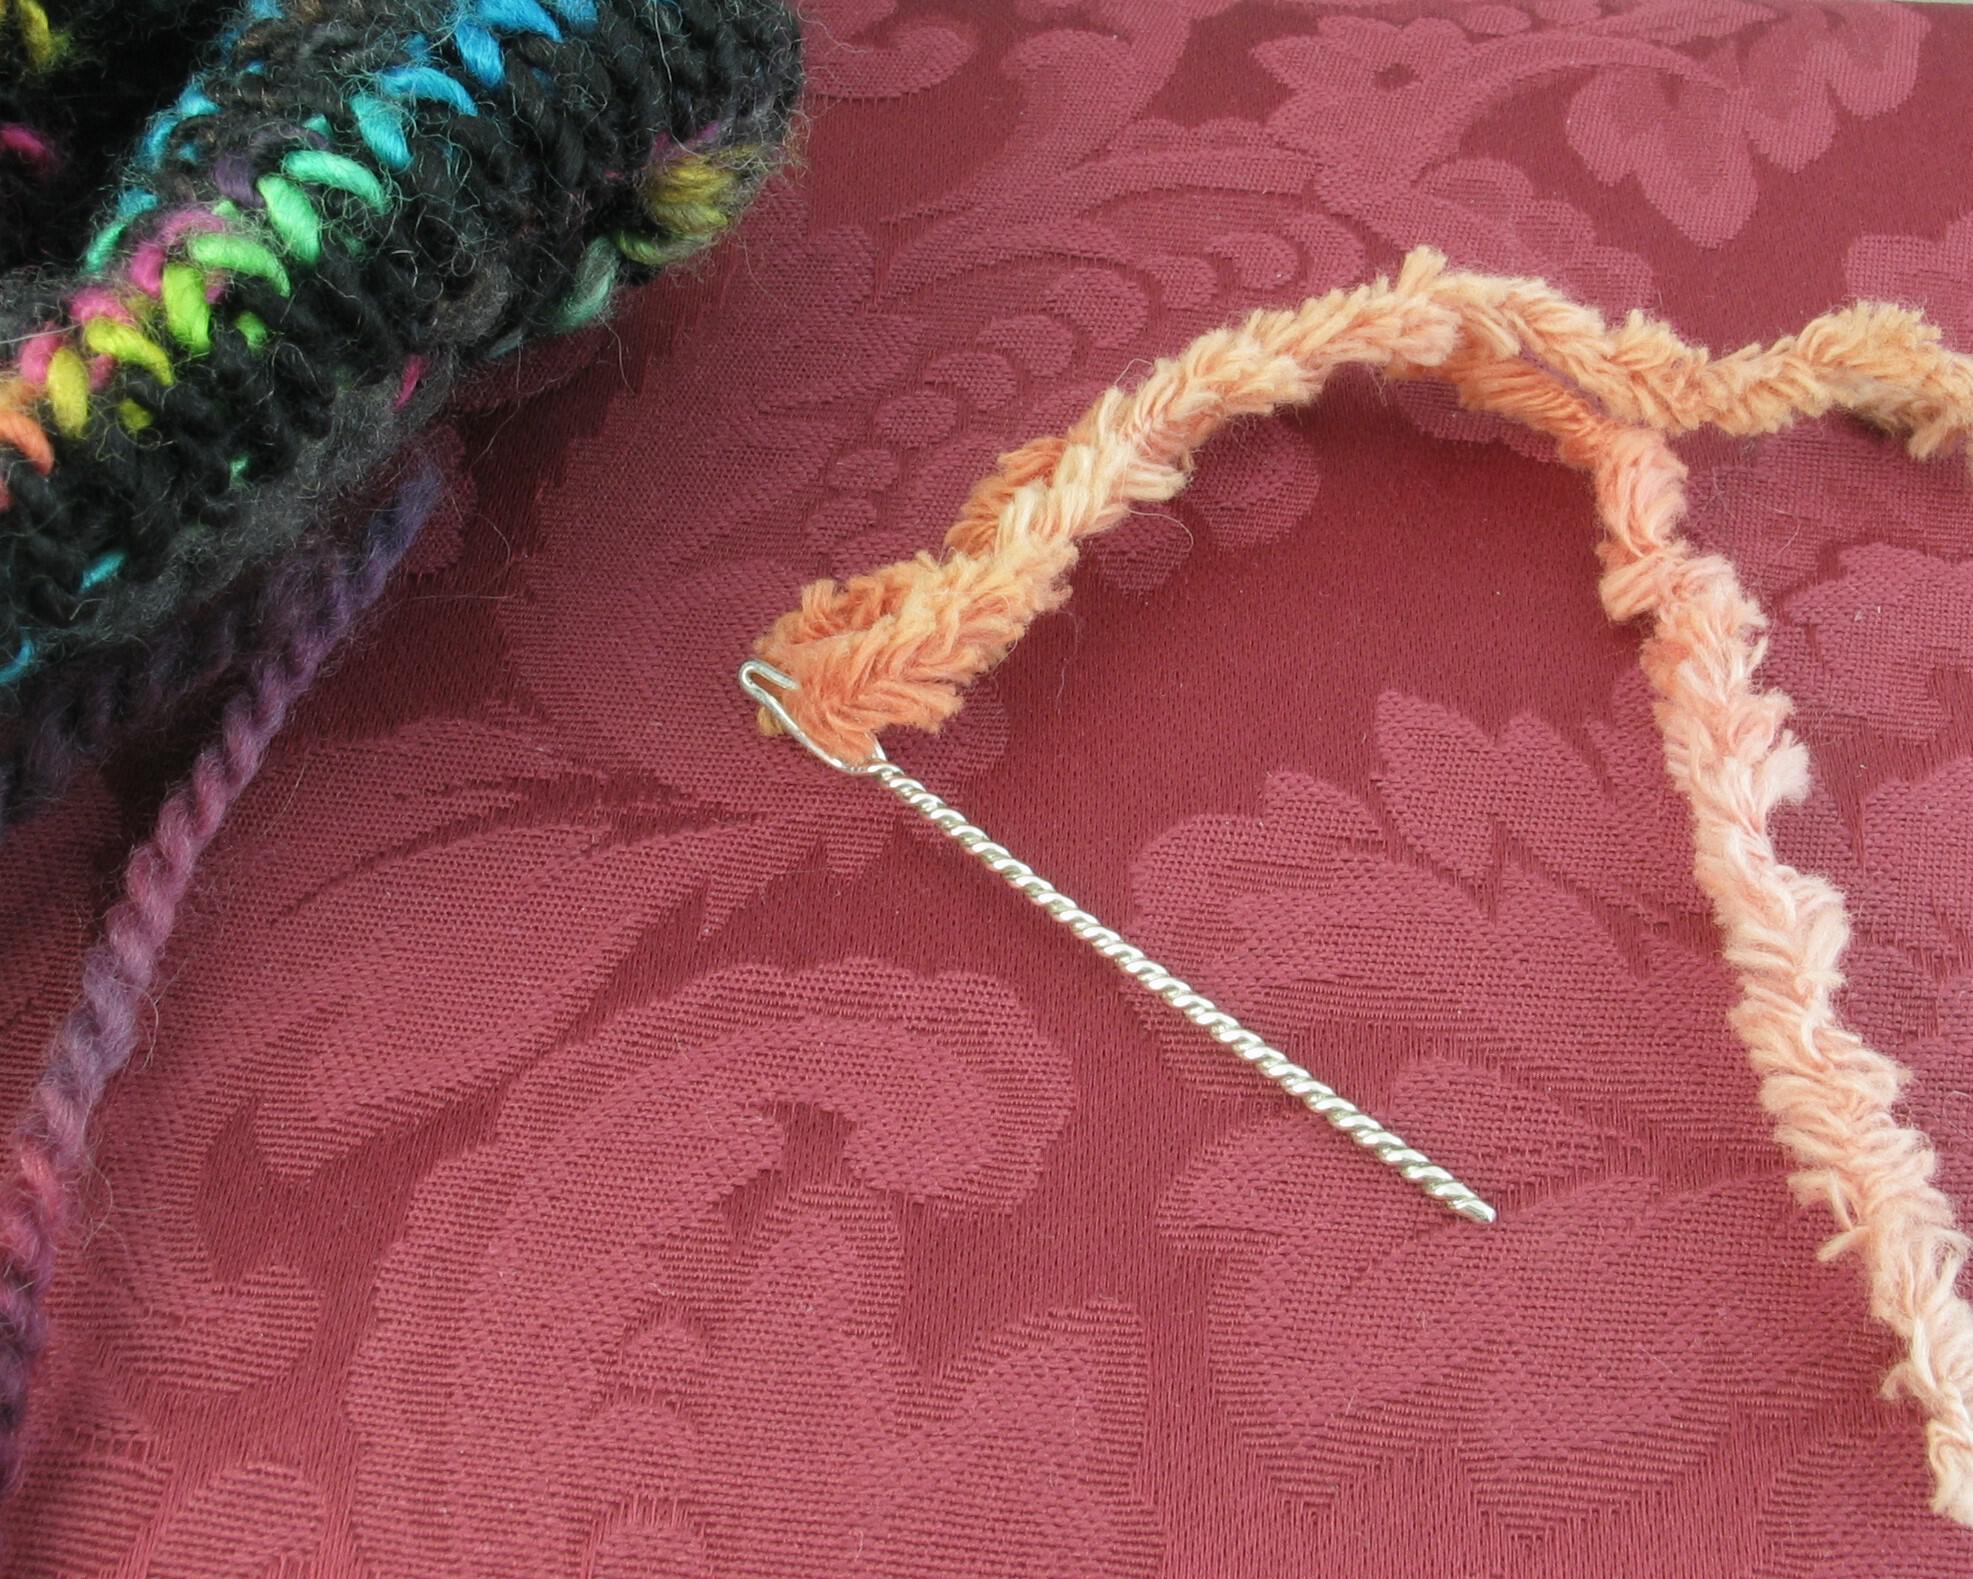 sterling silver knitting darning needle